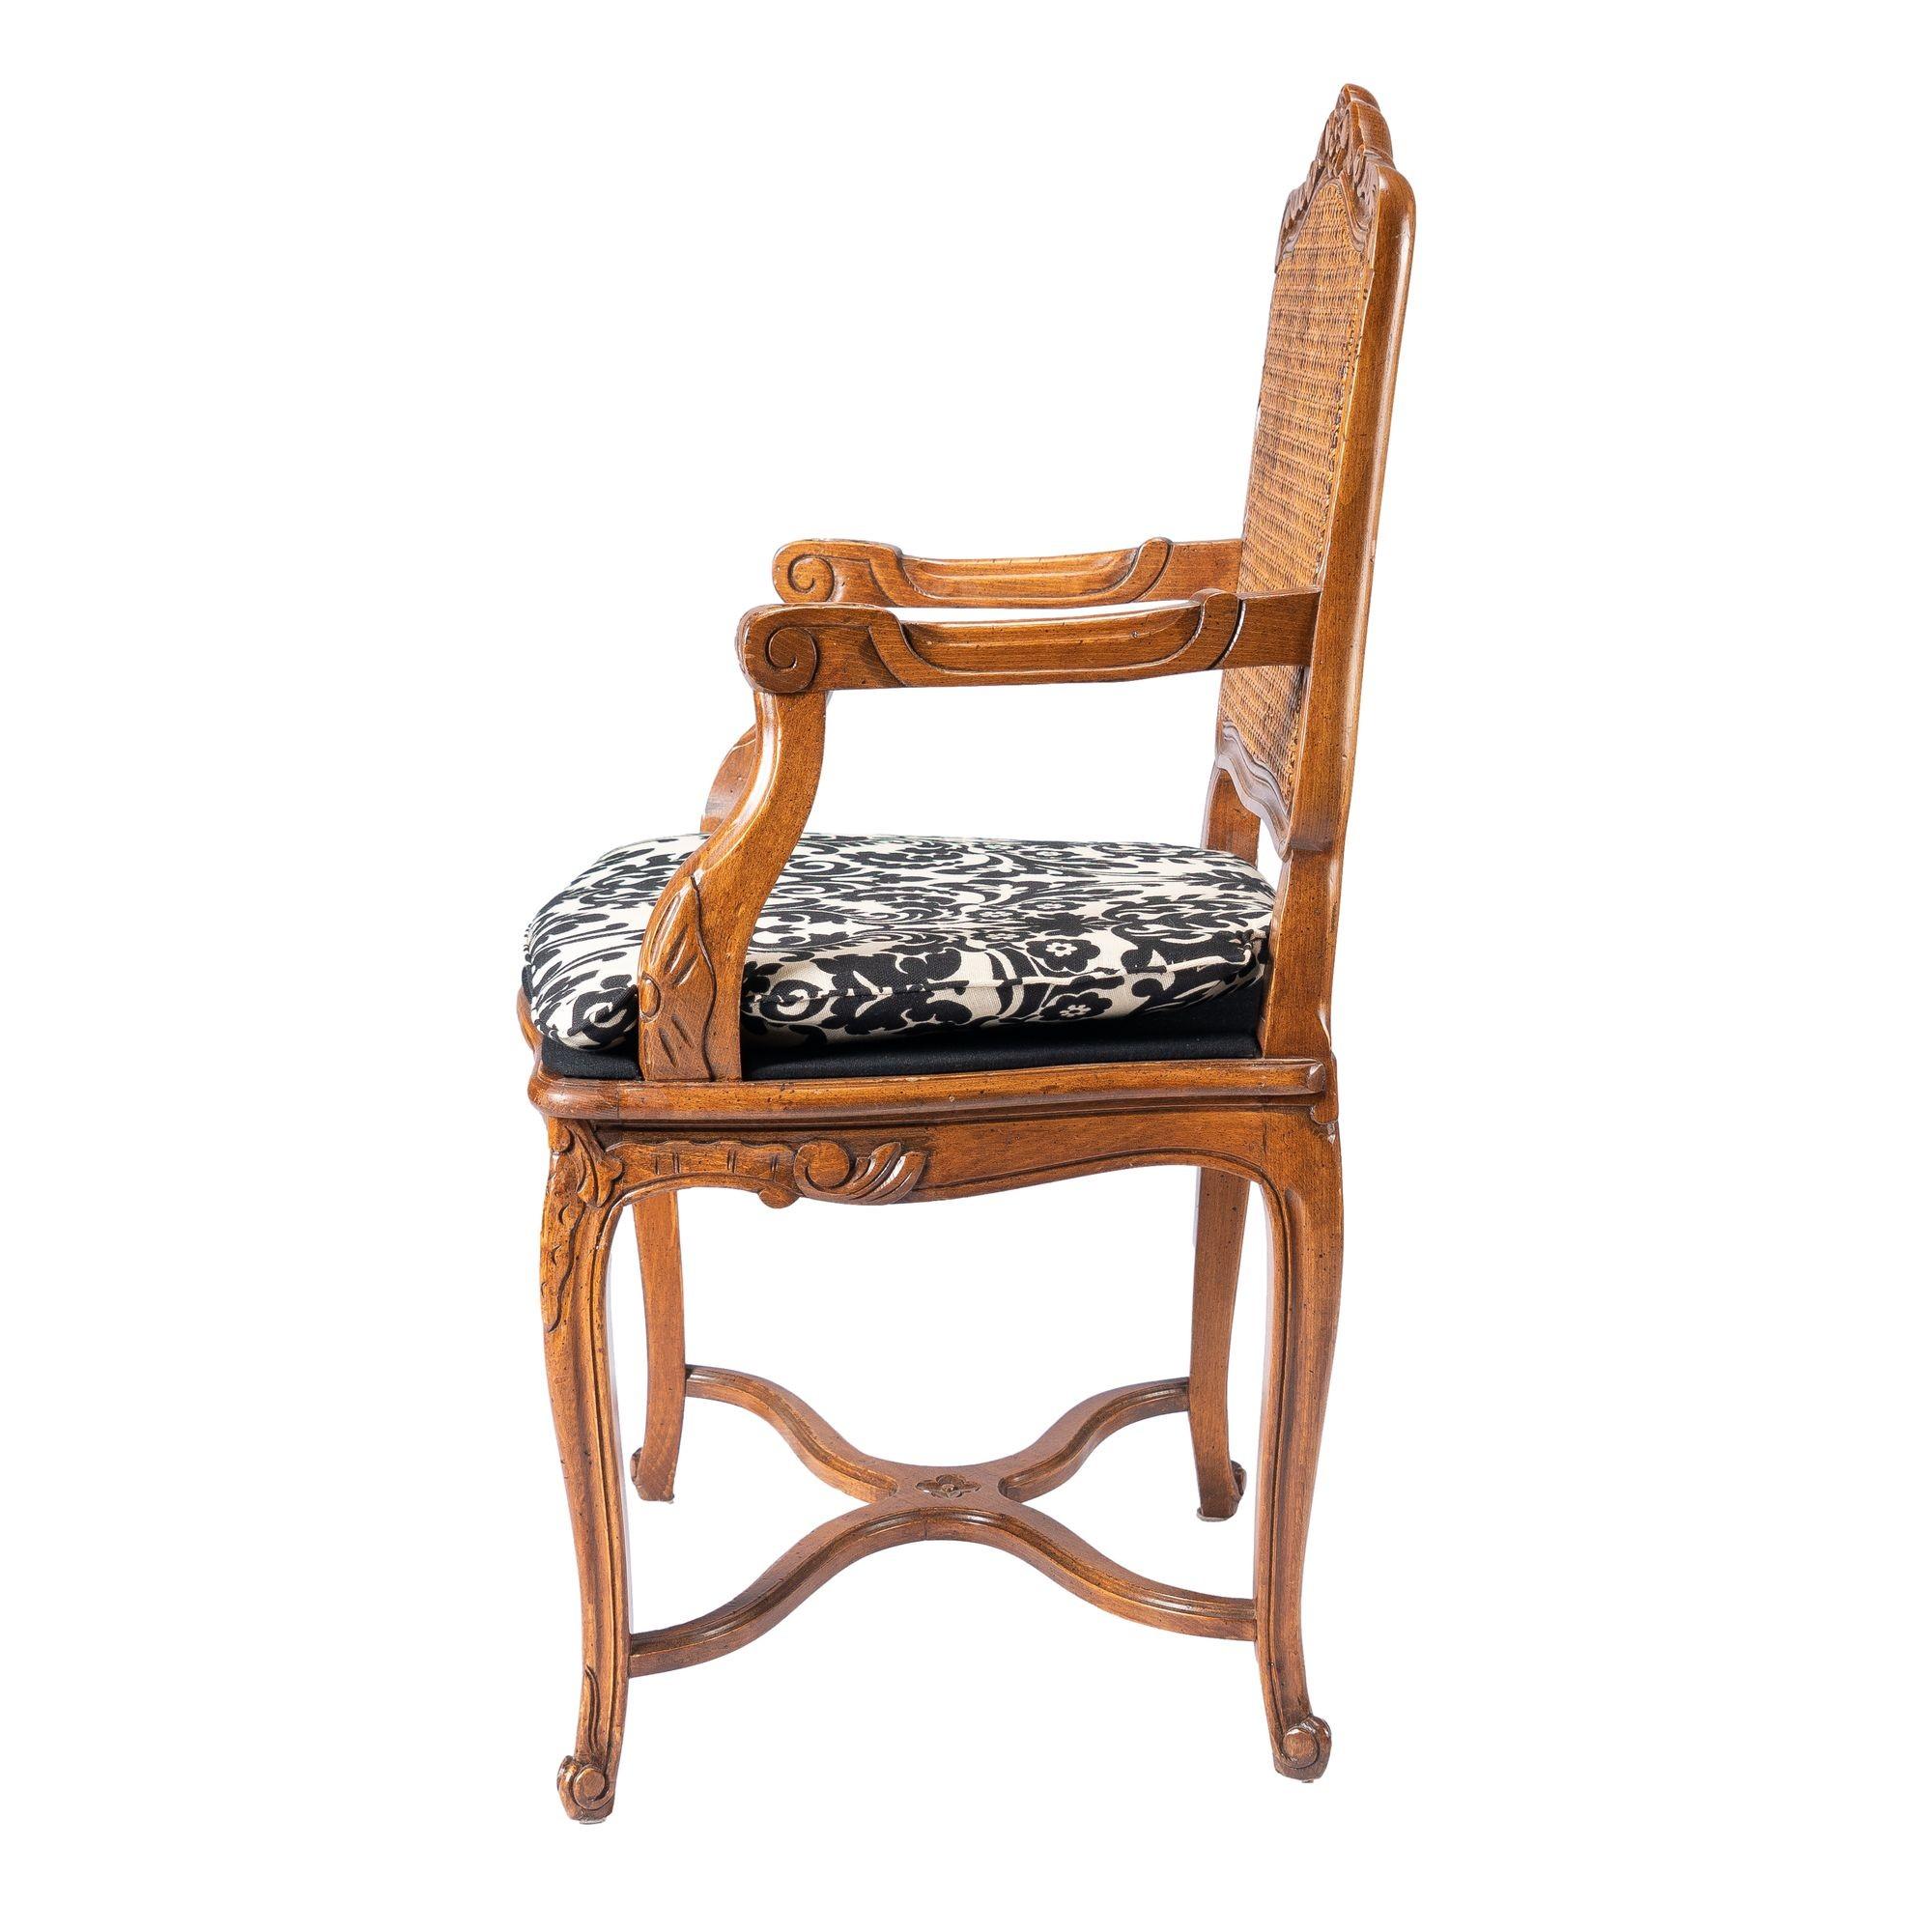 Louis XVI French Louis XVl style fauteuil, c. 1900's For Sale